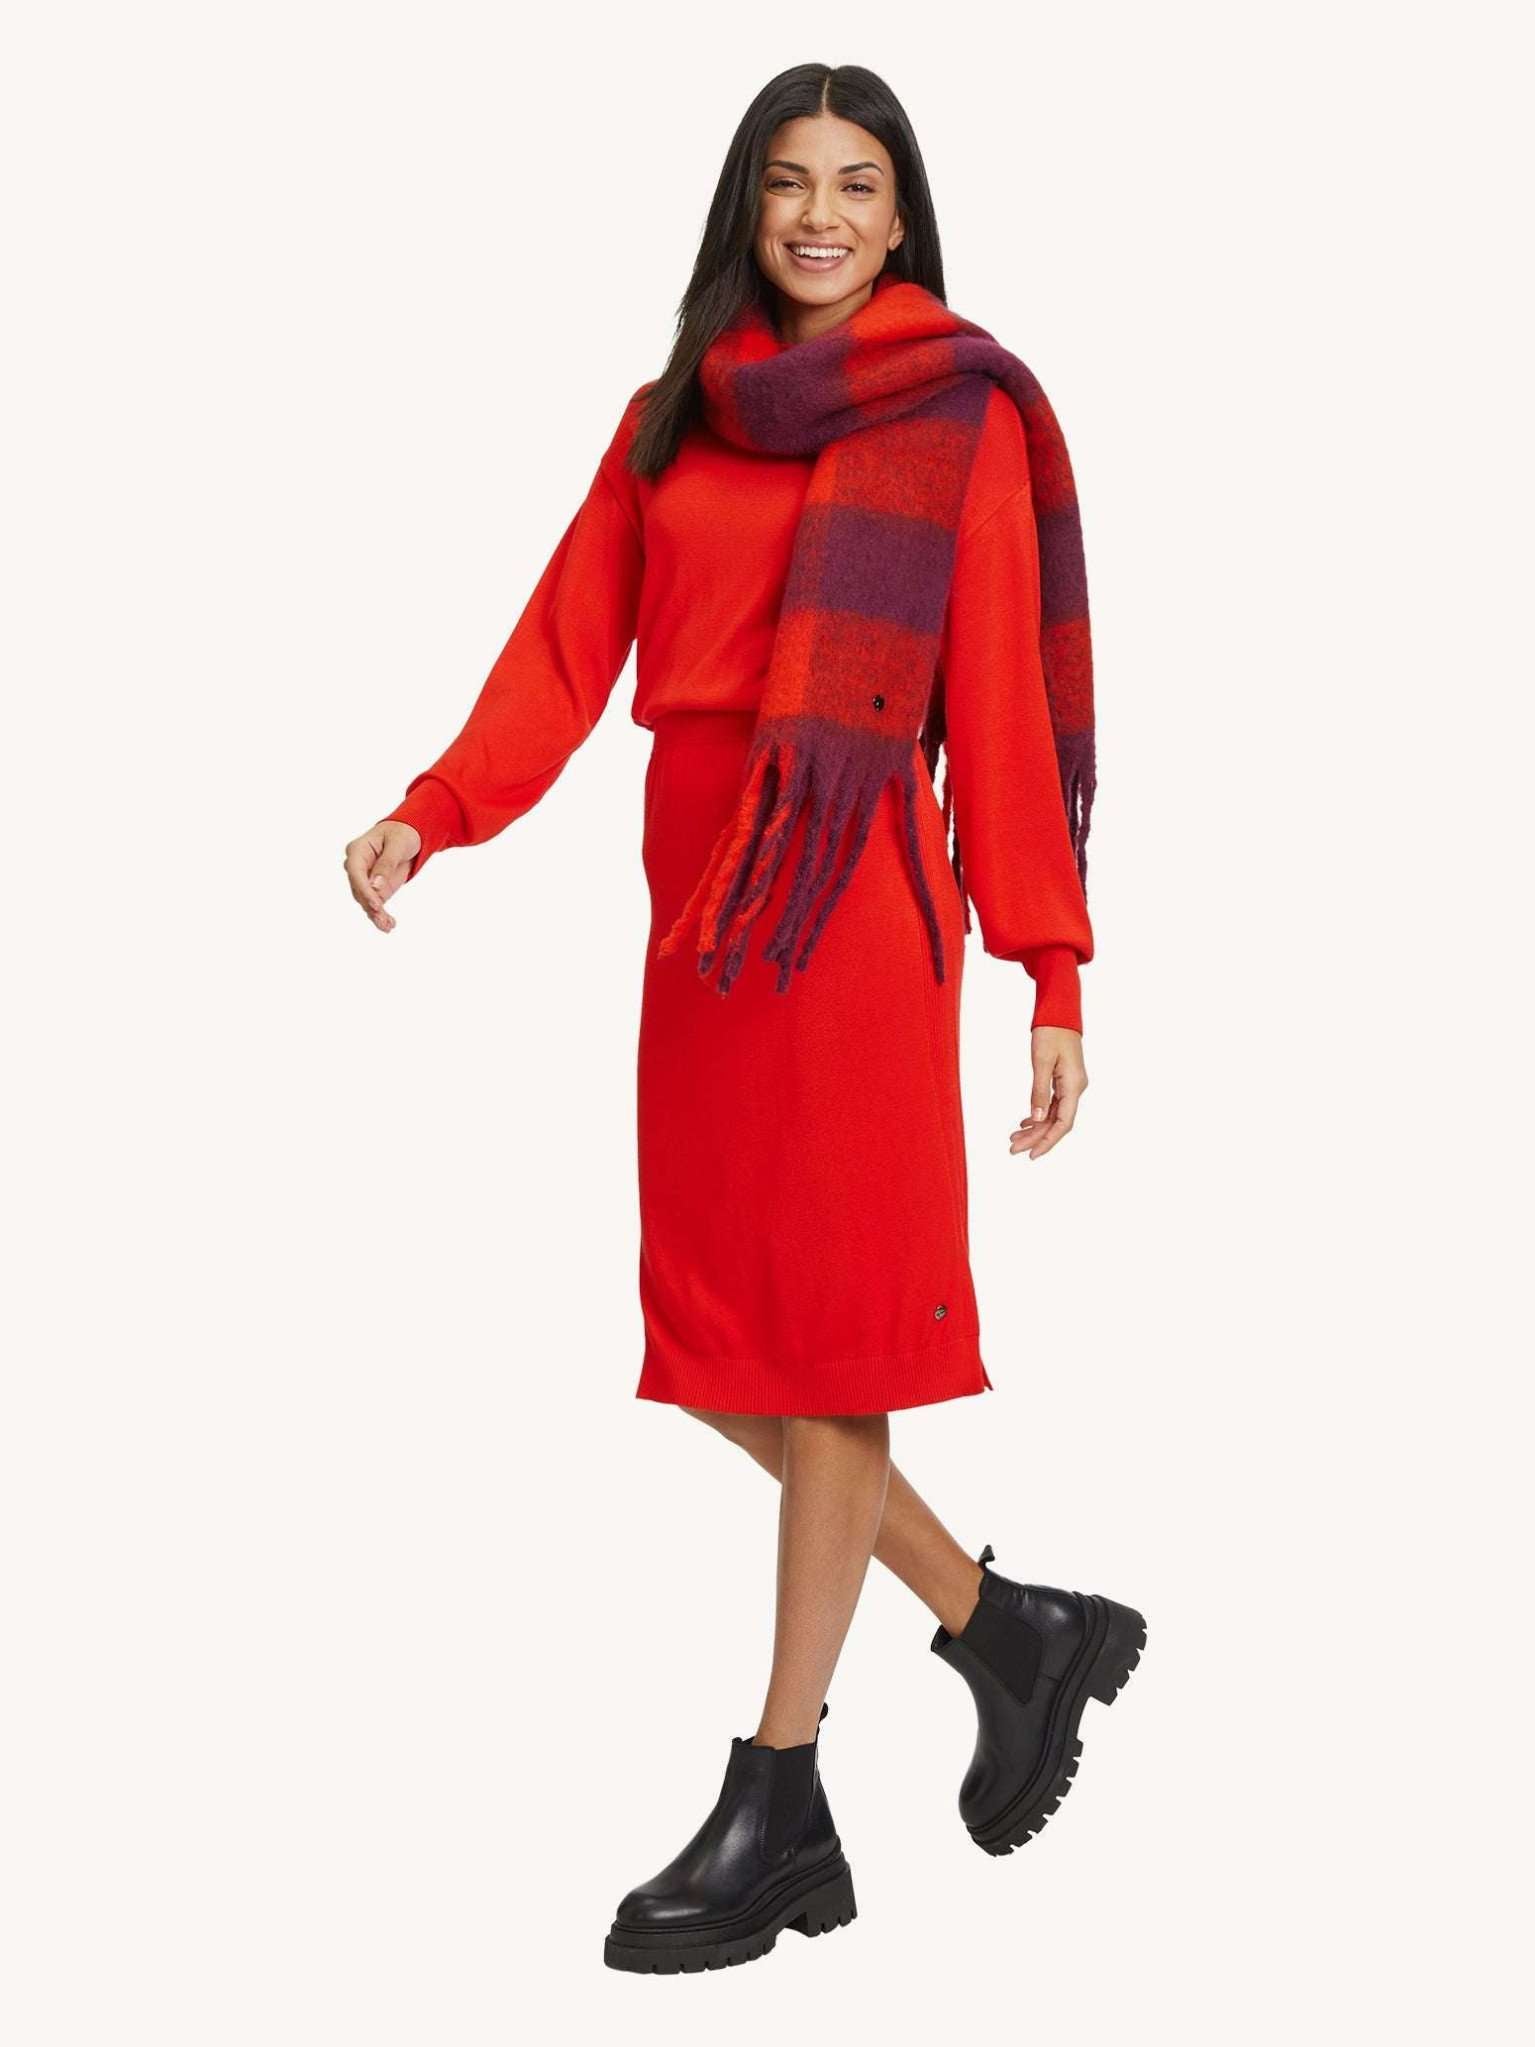 Barrio Knit Dress in Fiery Red Kleider Tamaris   